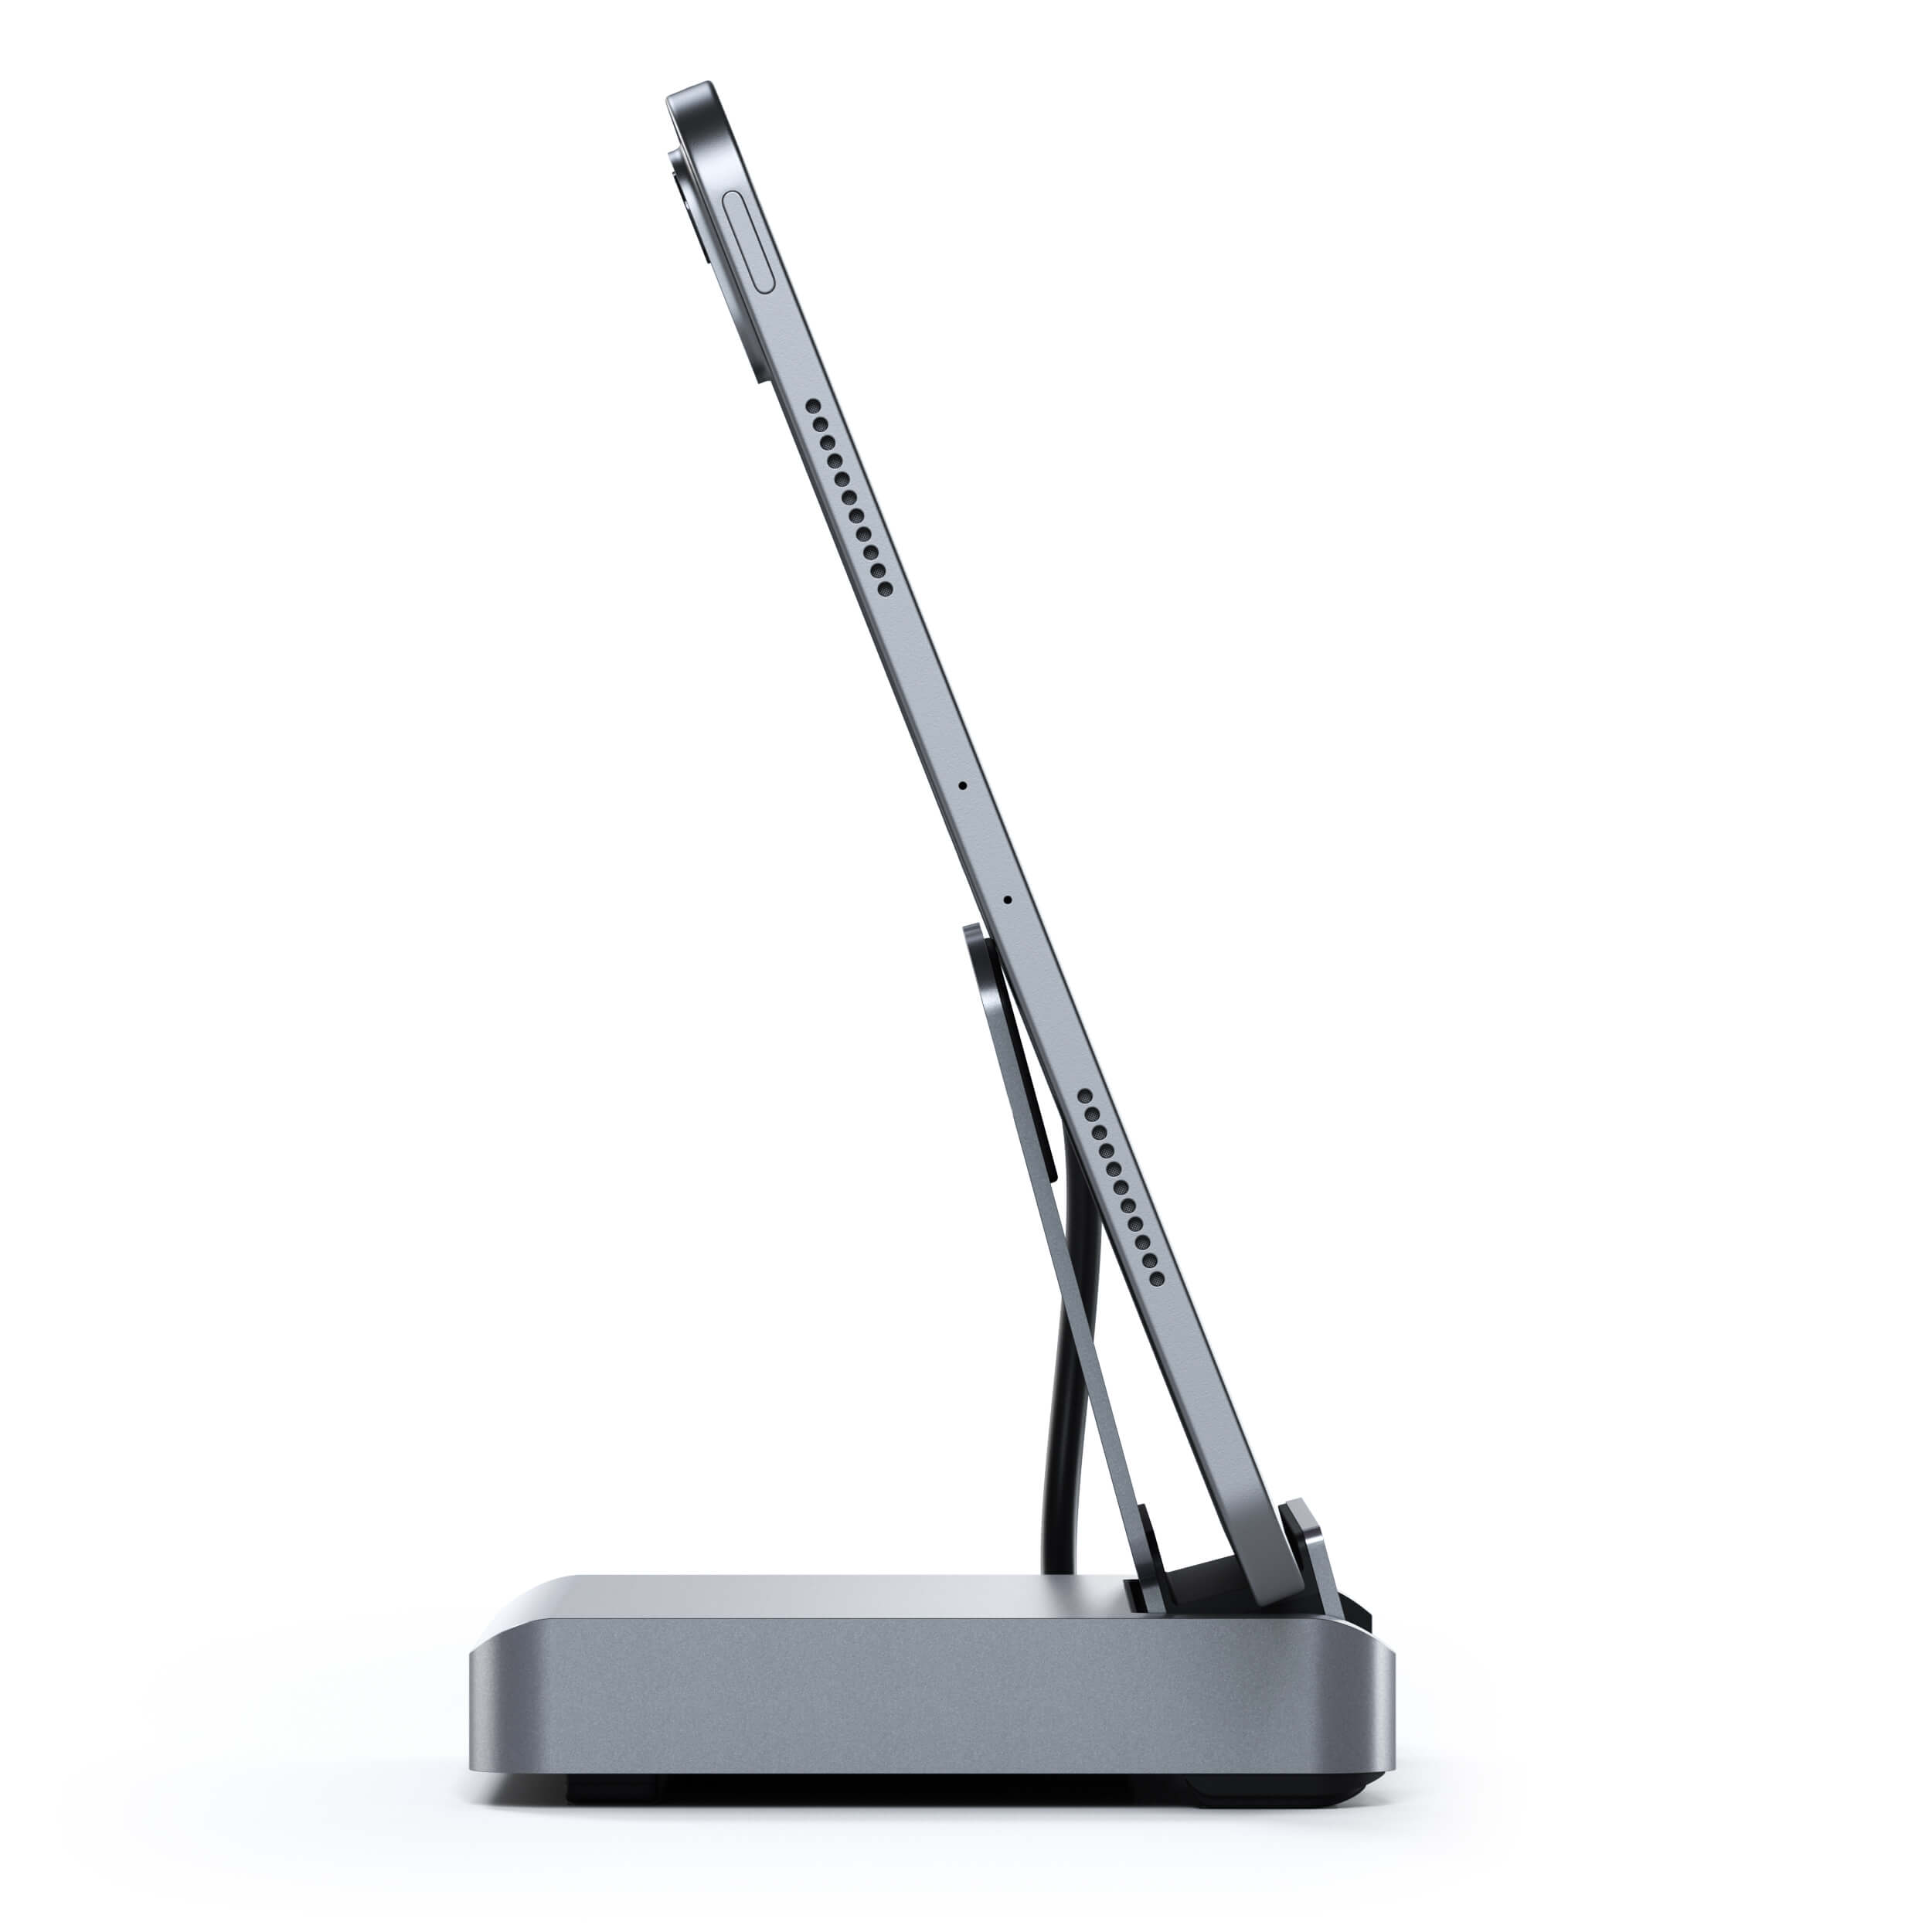 Satechi Aluminum Stand Hub for iPad Pro space gray 02 • techboys.de • smarte News, auf den Punkt!